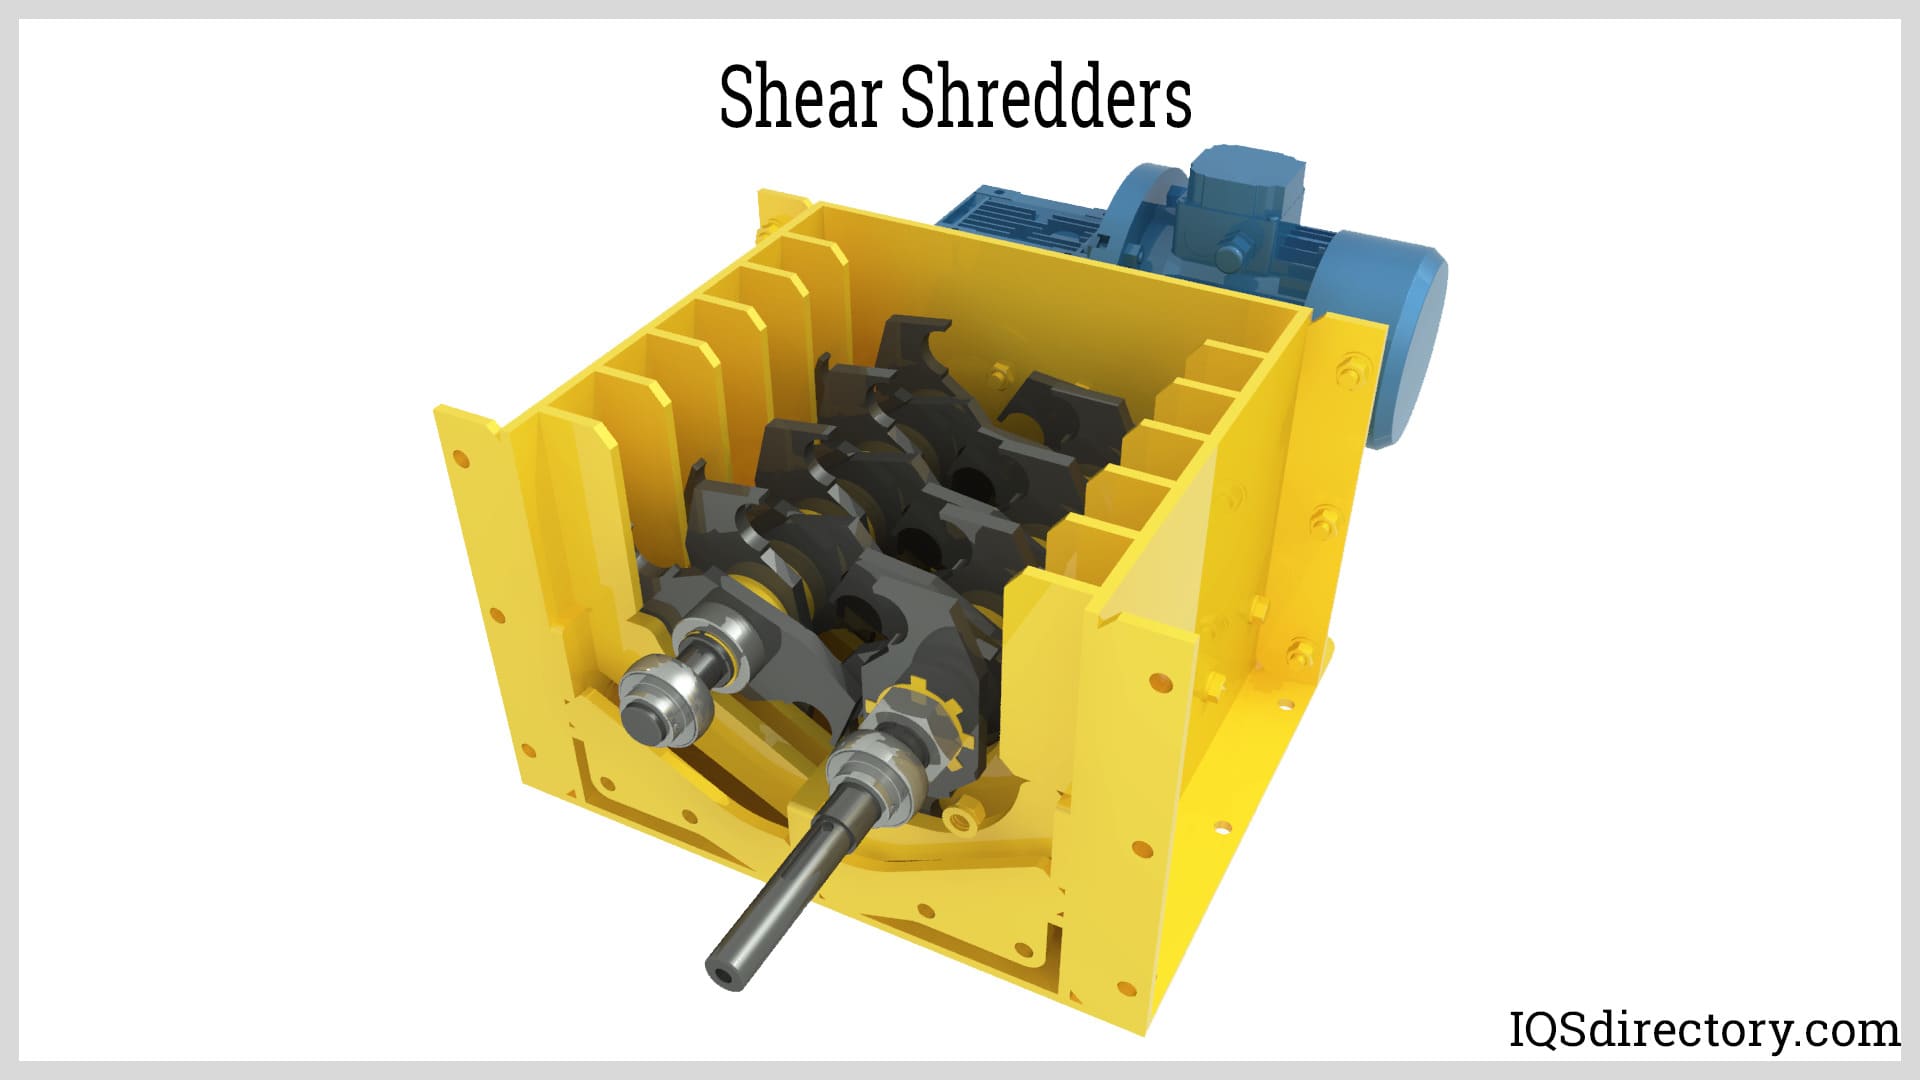 Shear Shredders